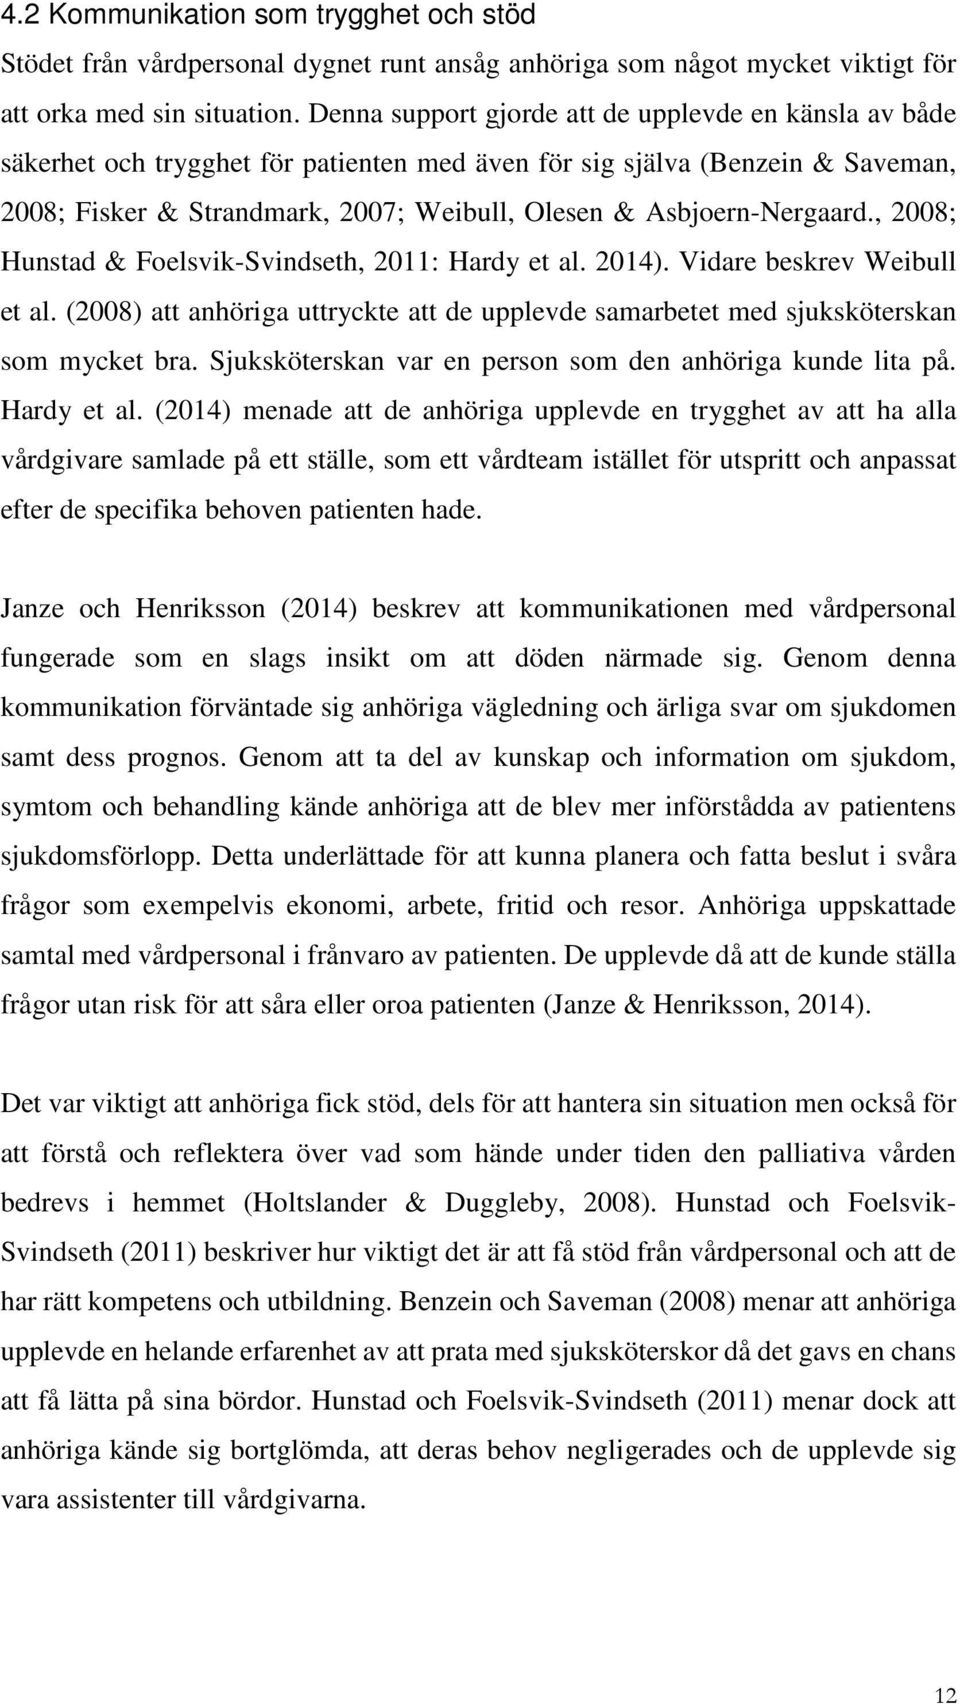 Asbjoern-Nergaard., 2008; Hunstad & Foelsvik-Svindseth, 2011: Hardy et al. 2014). Vidare beskrev Weibull et al.